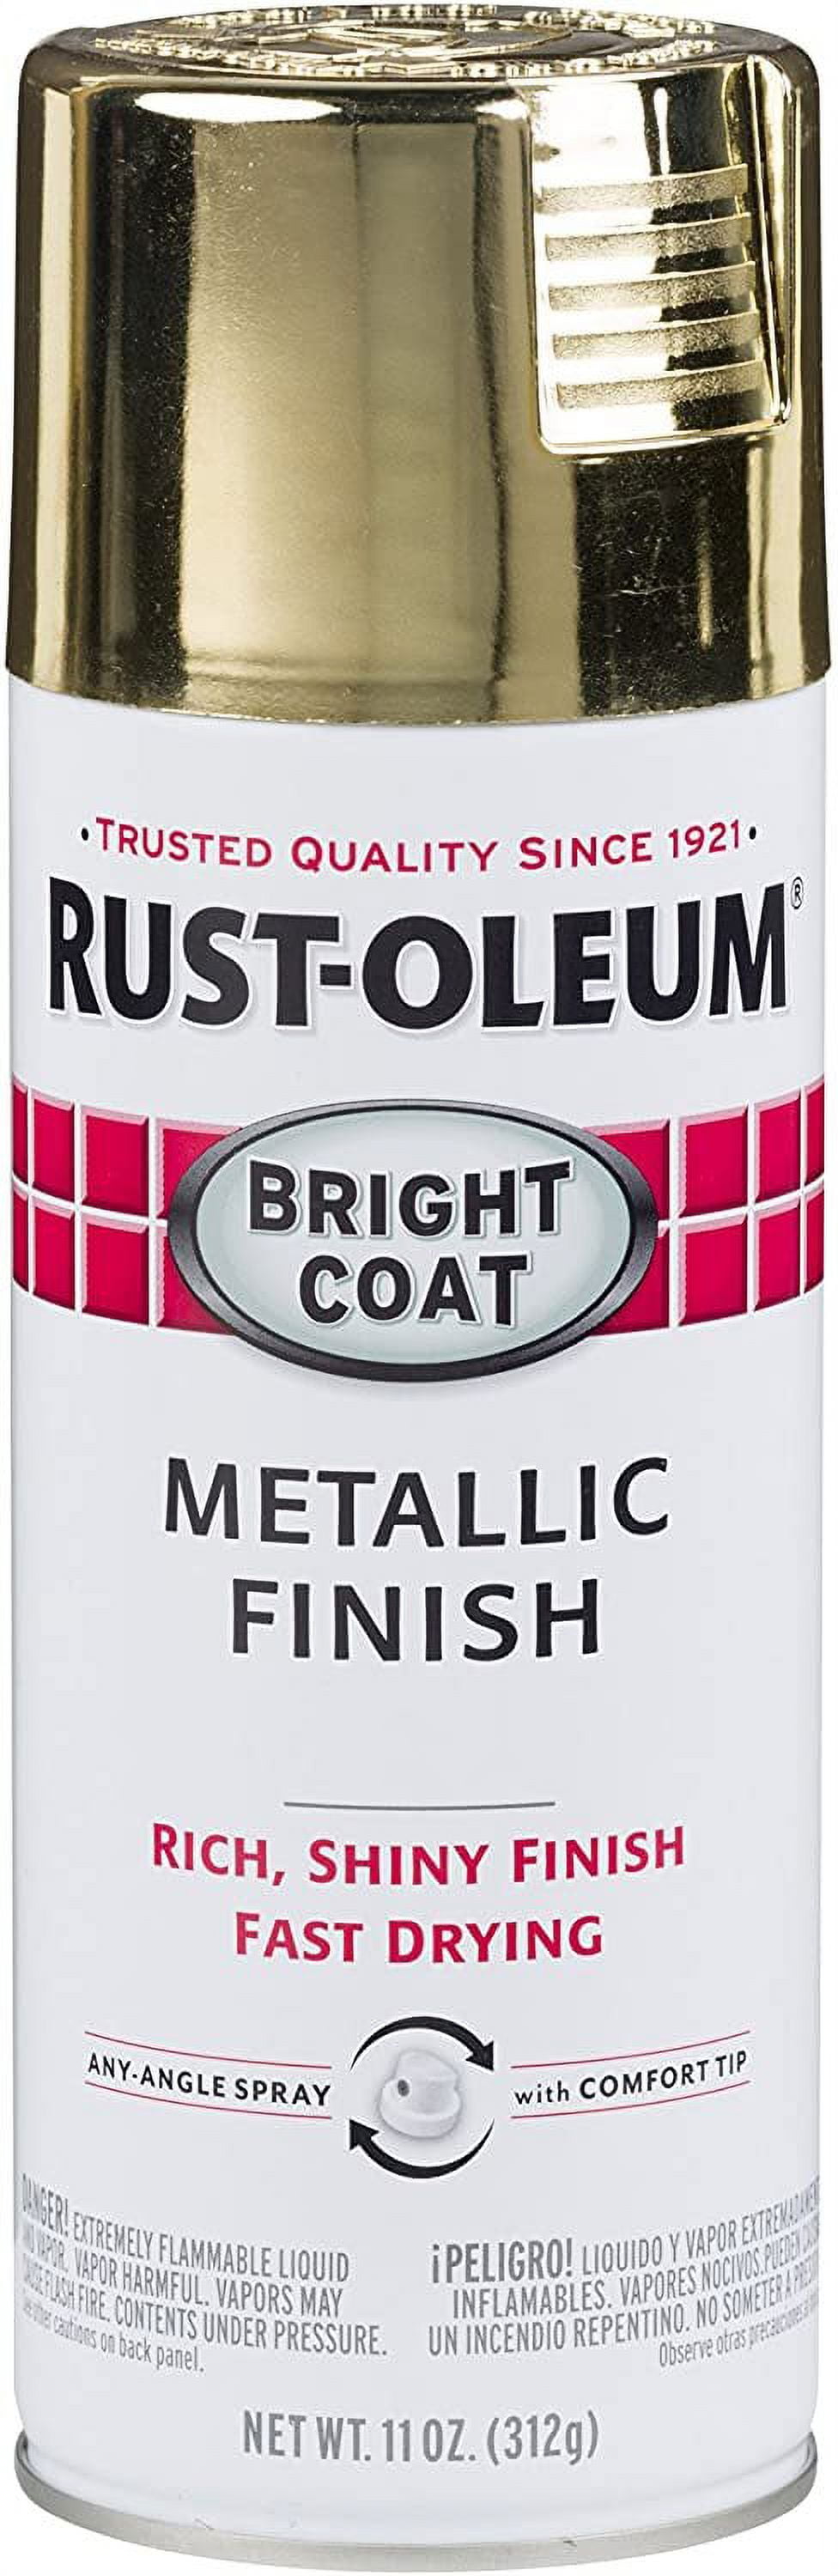 Rust-Oleum Metallic Gold Spray Paint, 11 oz.